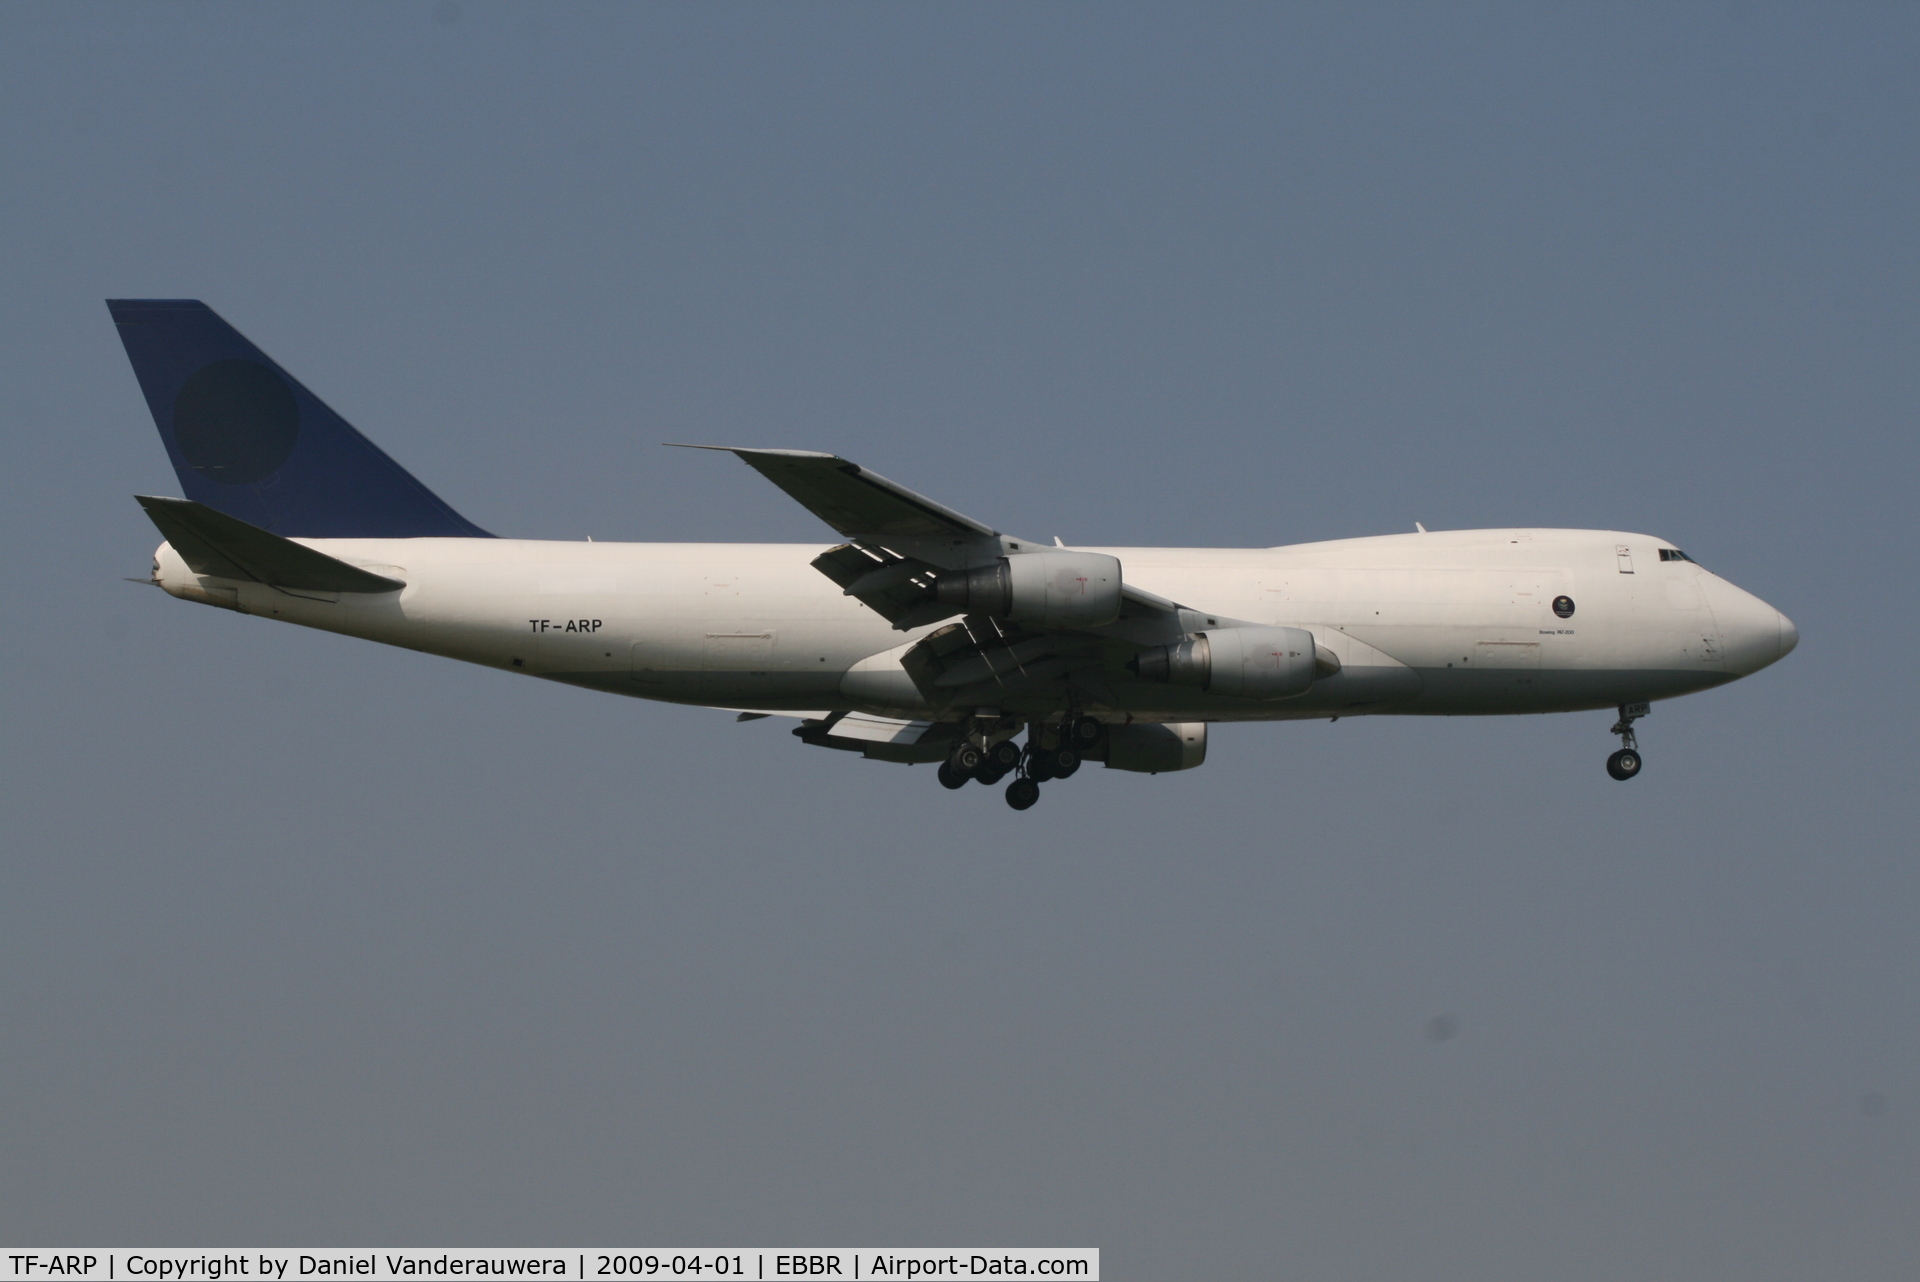 TF-ARP, 1985 Boeing 747-230F C/N 23348, Arriving to RWY 02